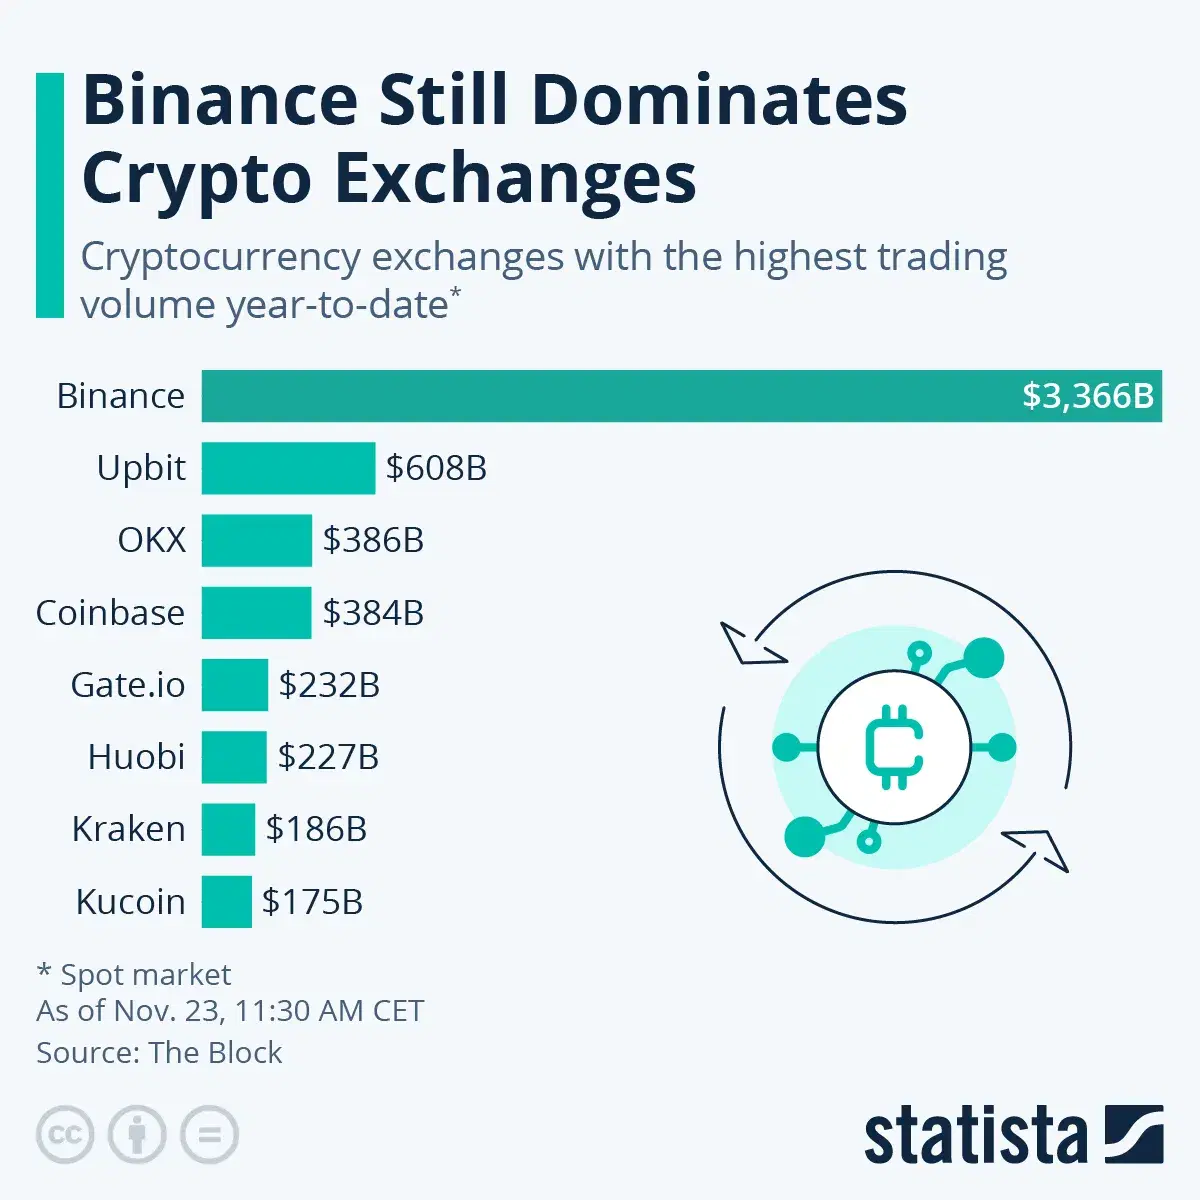 Binance is Still the Dominant Crypto Exchange